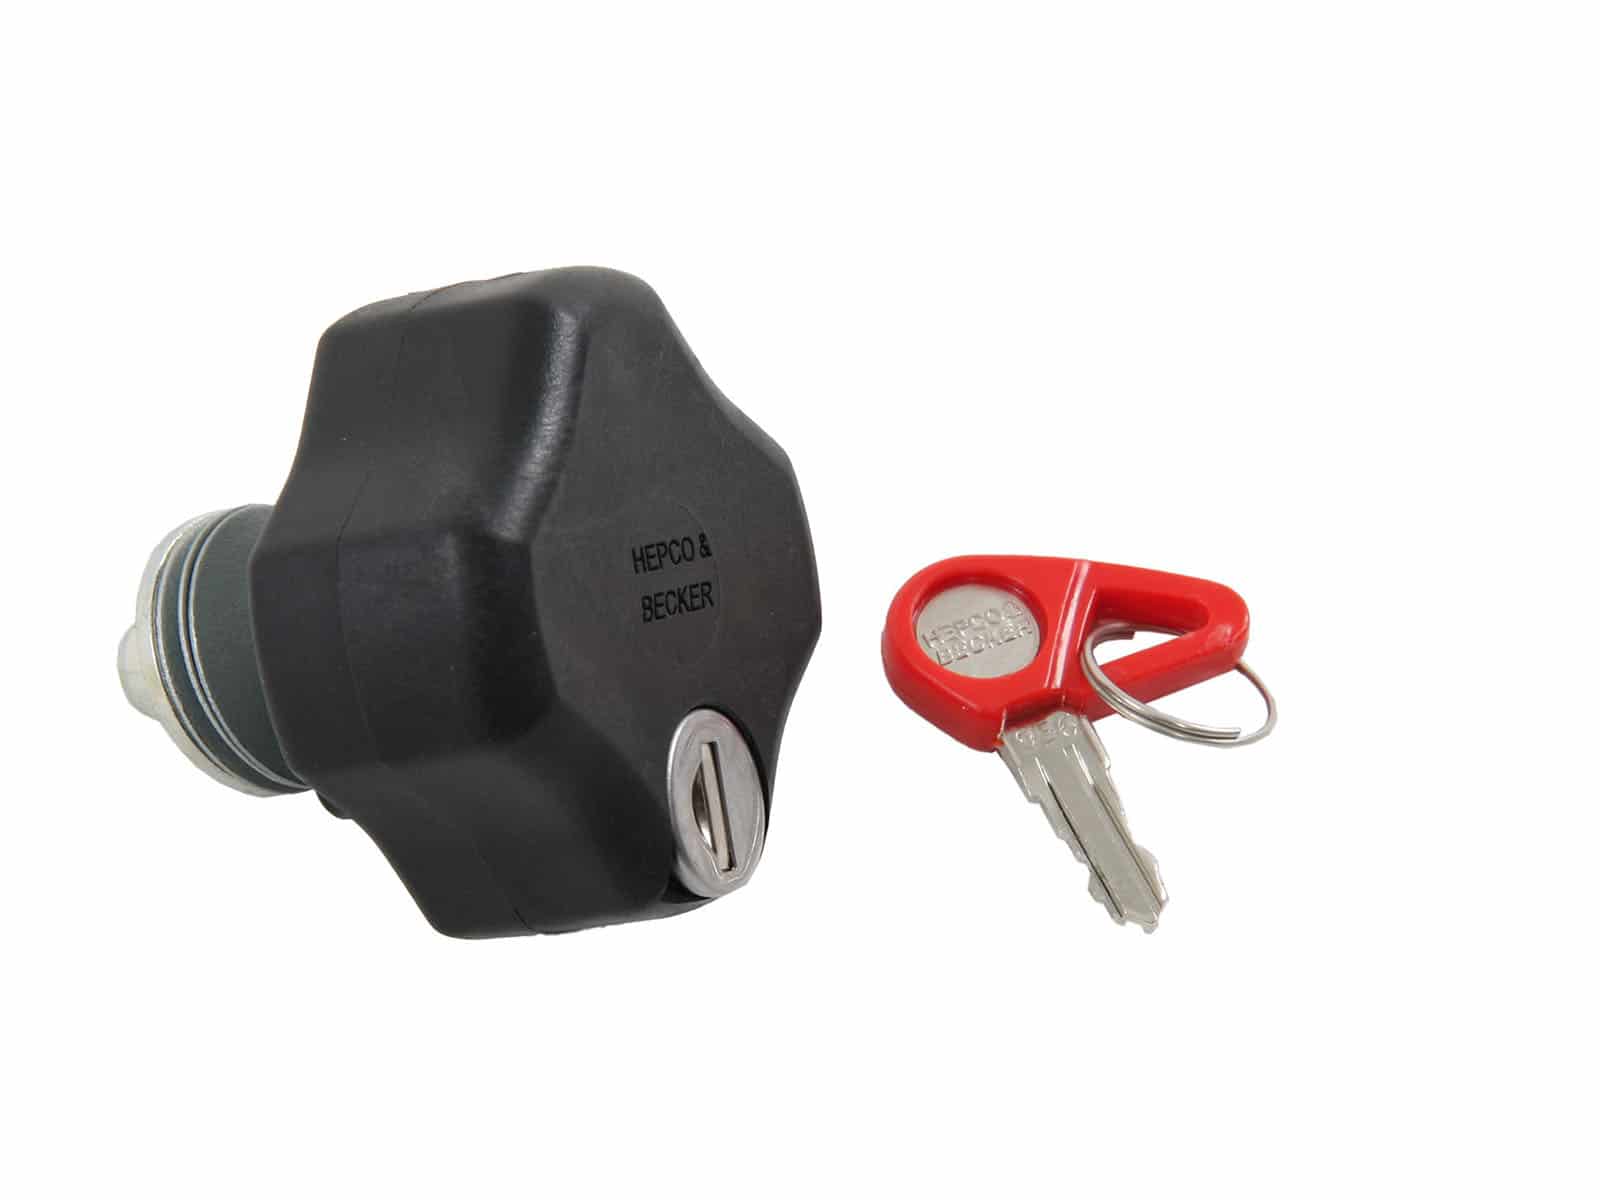 Lock-it Screw lockable for Hepco&Becker lock-it sidecarrier